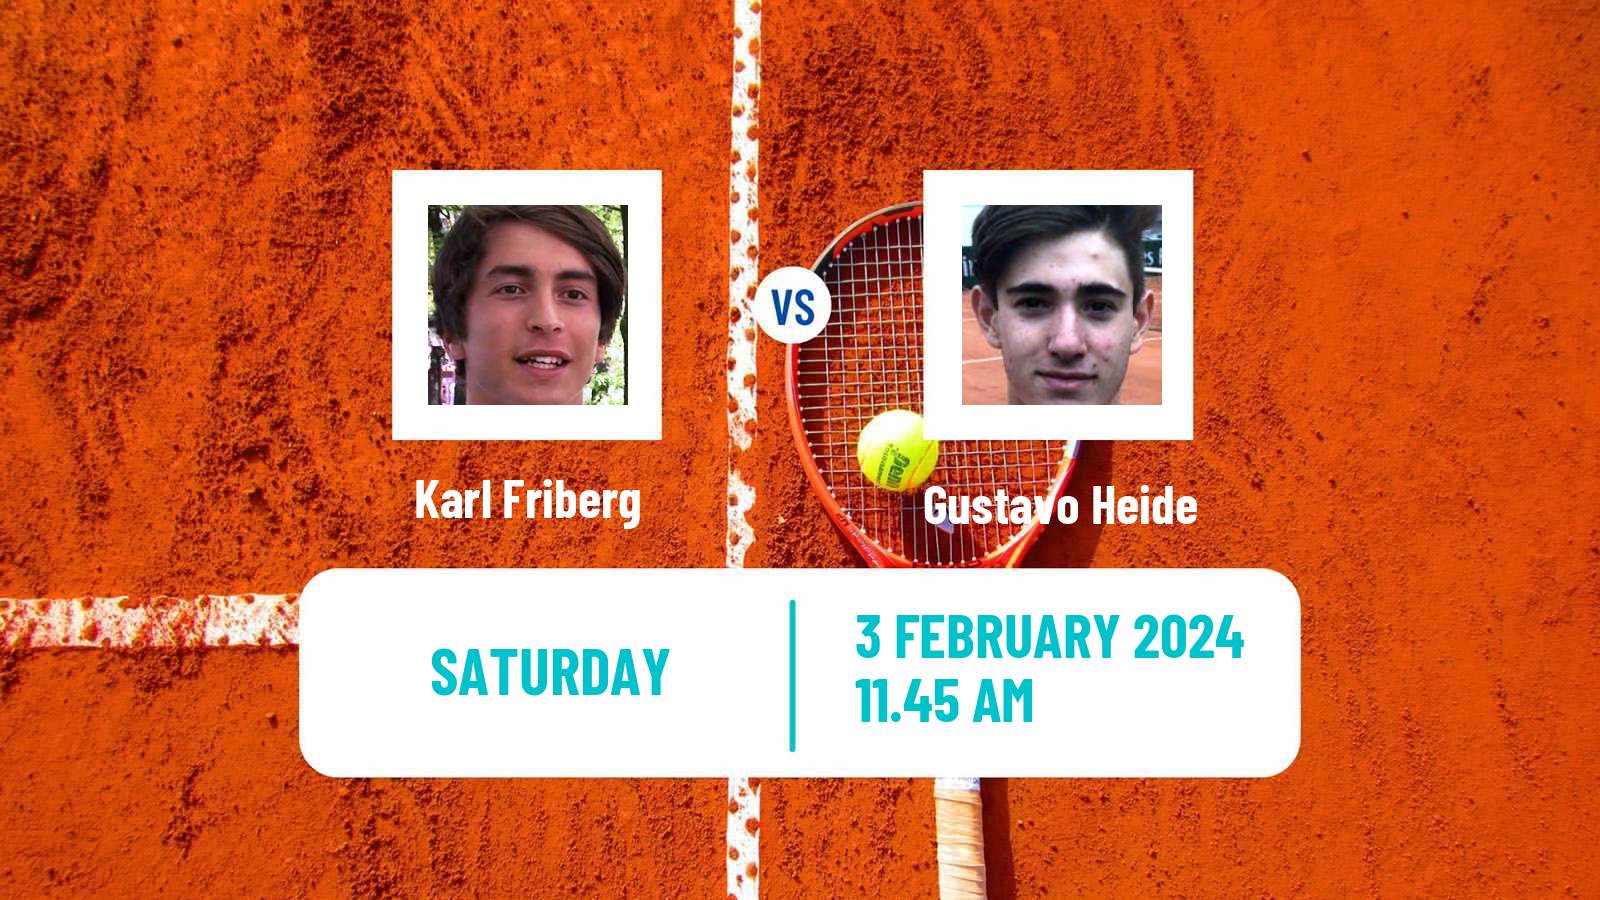 Tennis Davis Cup World Group Karl Friberg - Gustavo Heide